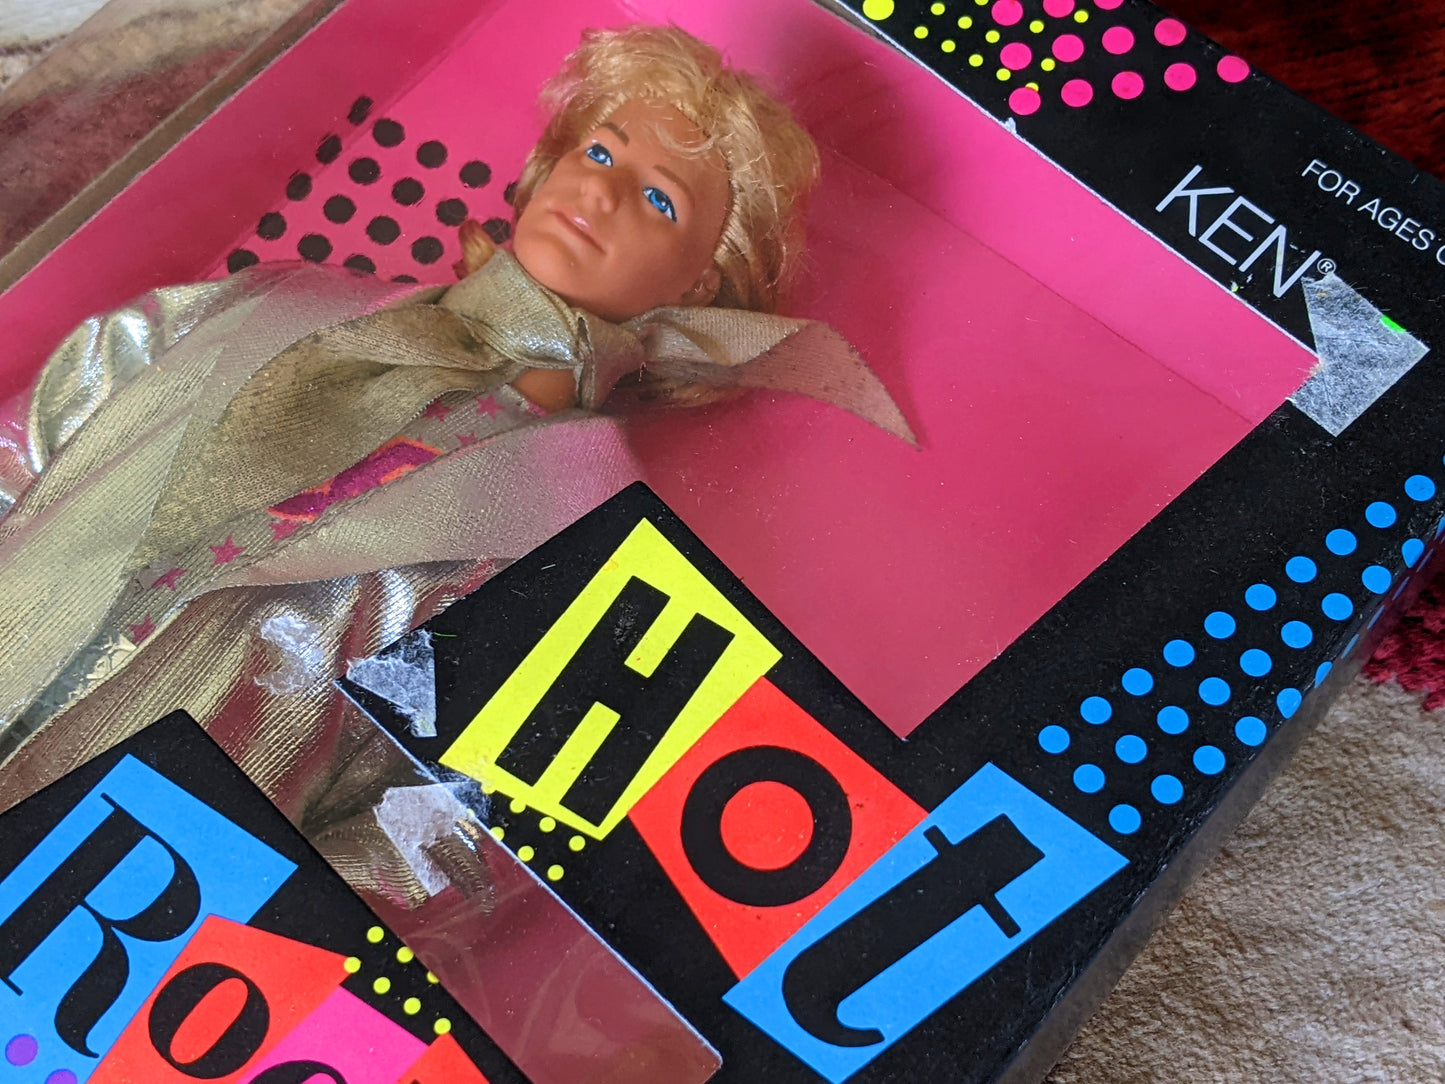 1986 Original & Sealed !! Barbie And The Rockers Ken Doll by Mattel No. 3131 !! Joyful Vintage Gifts !! 80s Toys !!